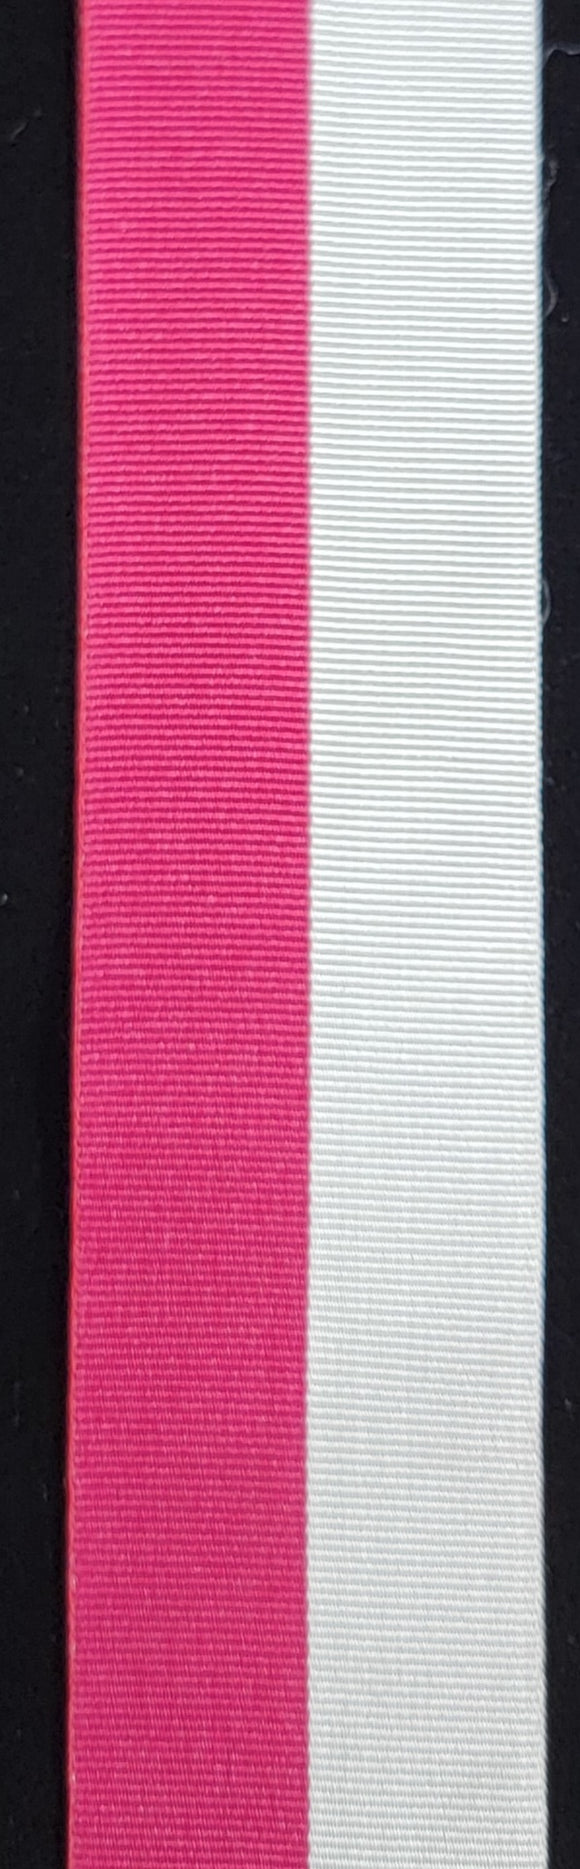 Ribbon, Legion Ladies' Auxiliary Service Medal